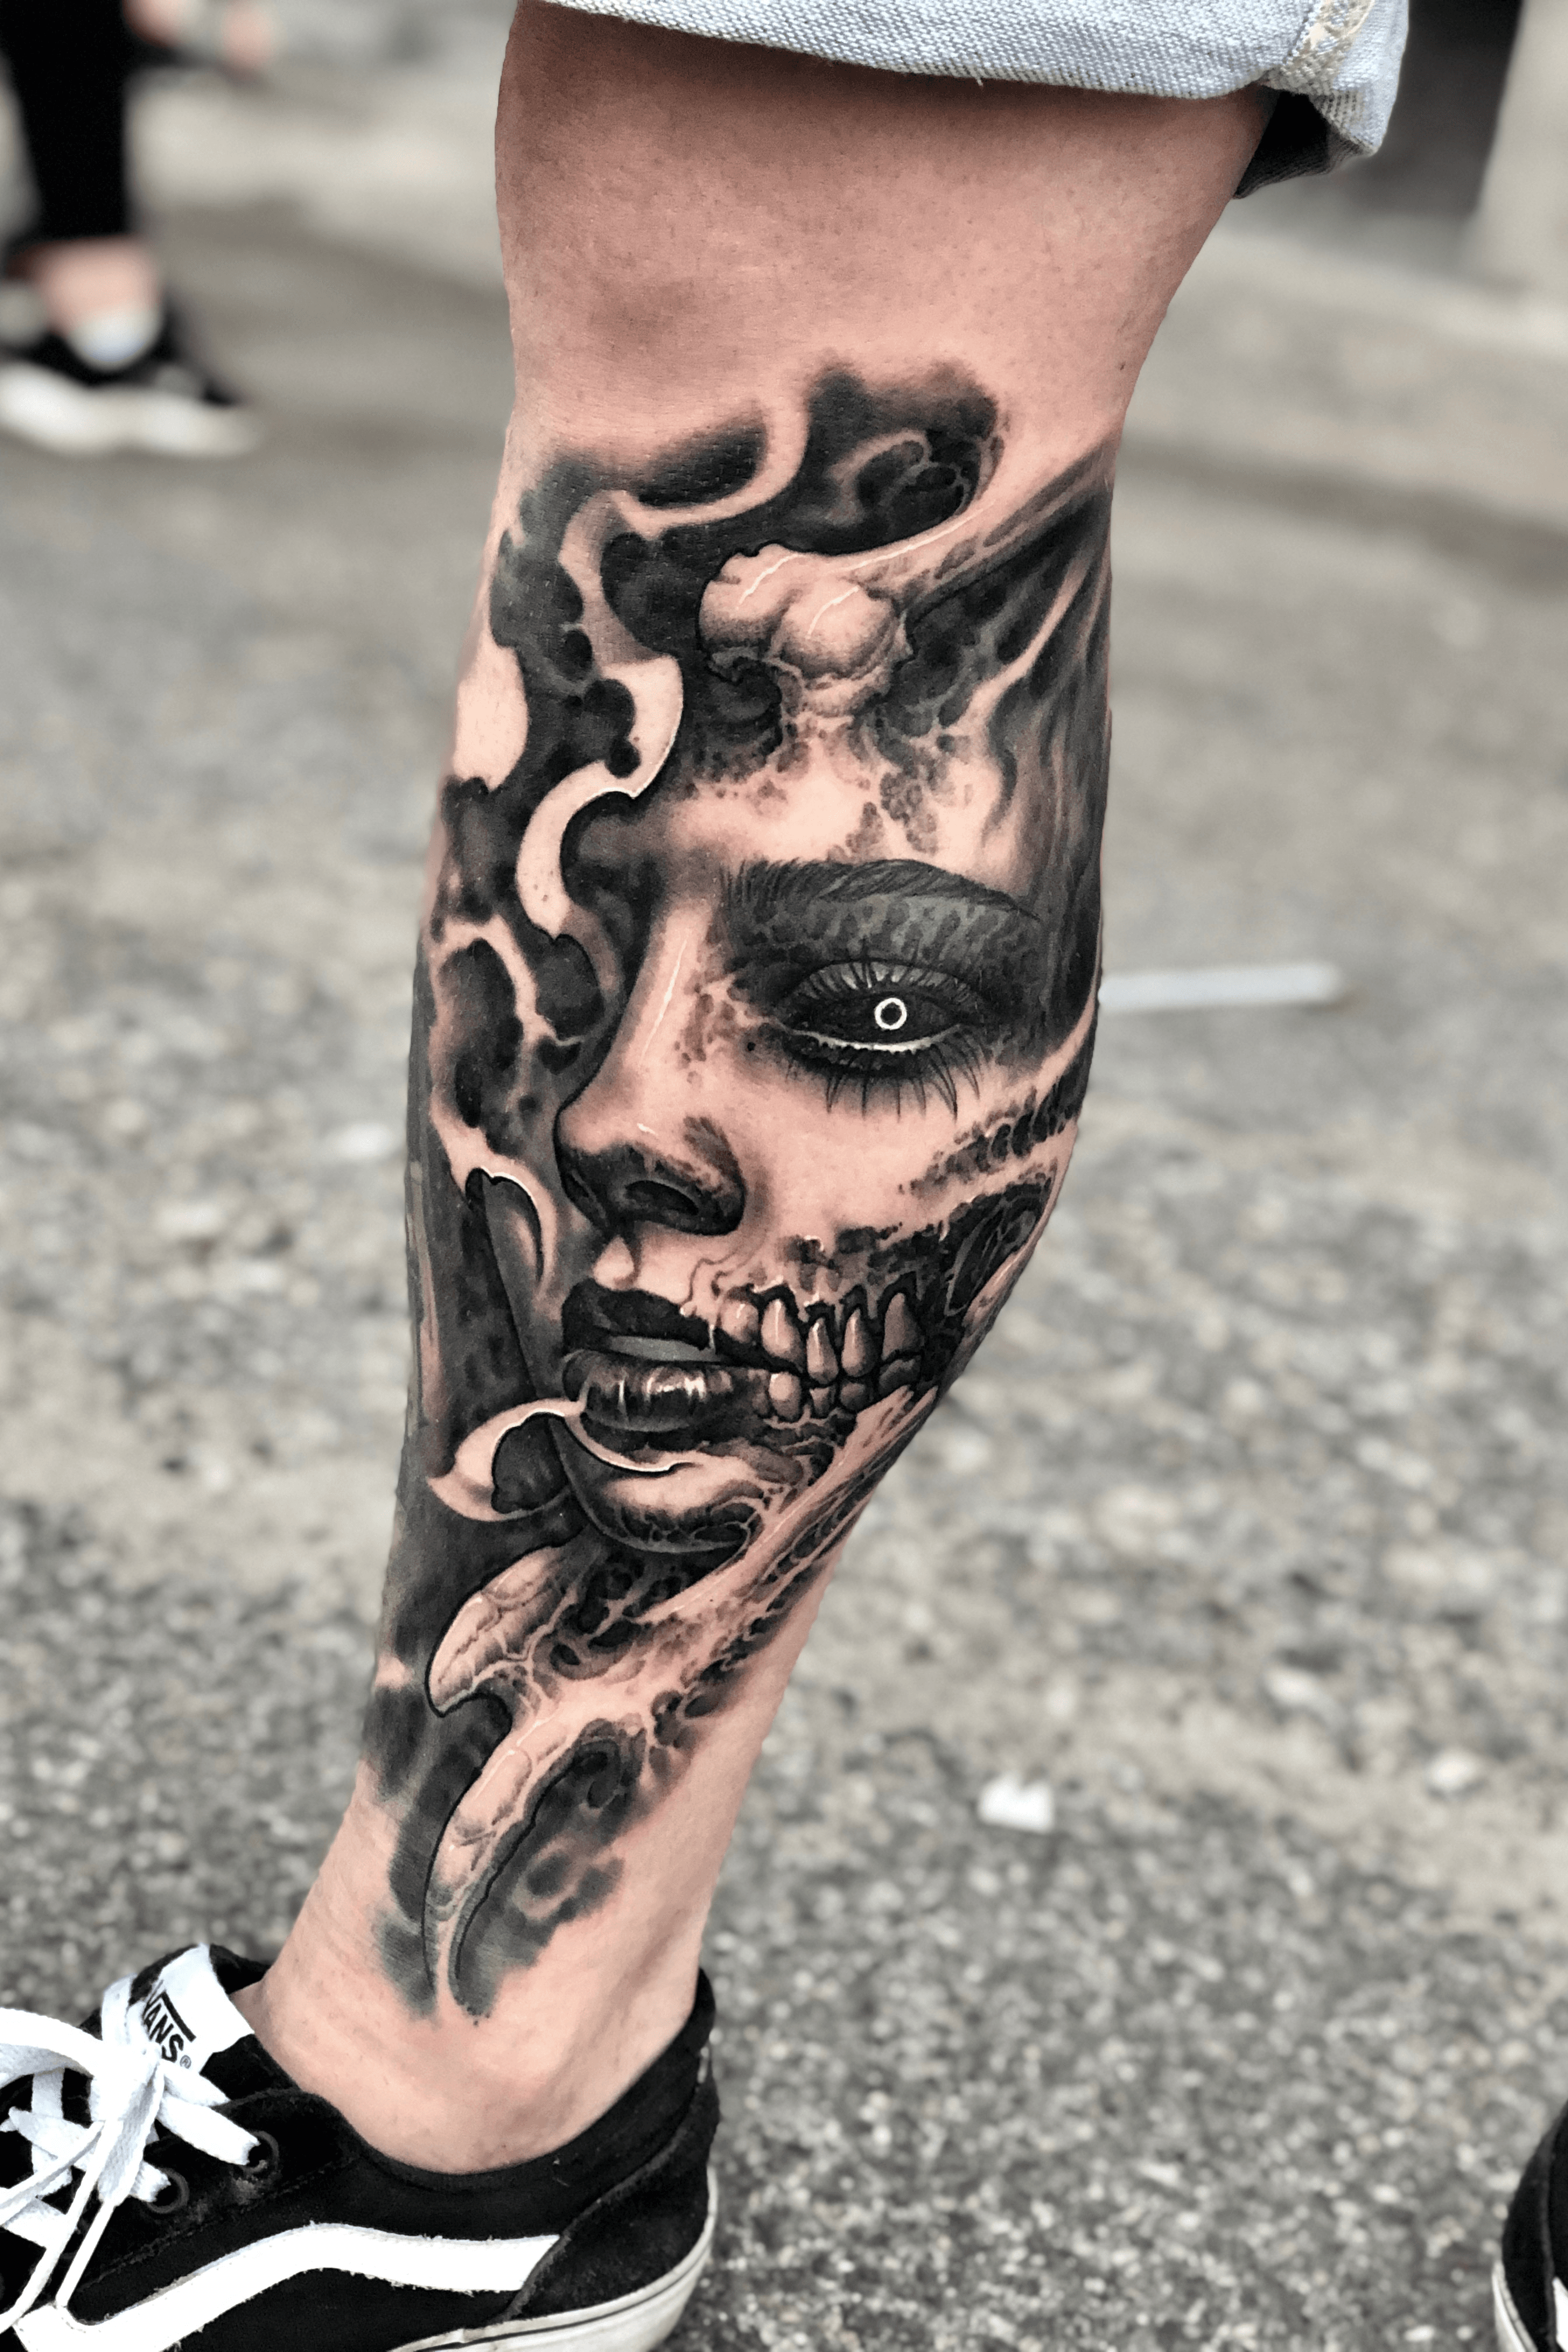 Tattoo design  inner demons by Strigaart on DeviantArt